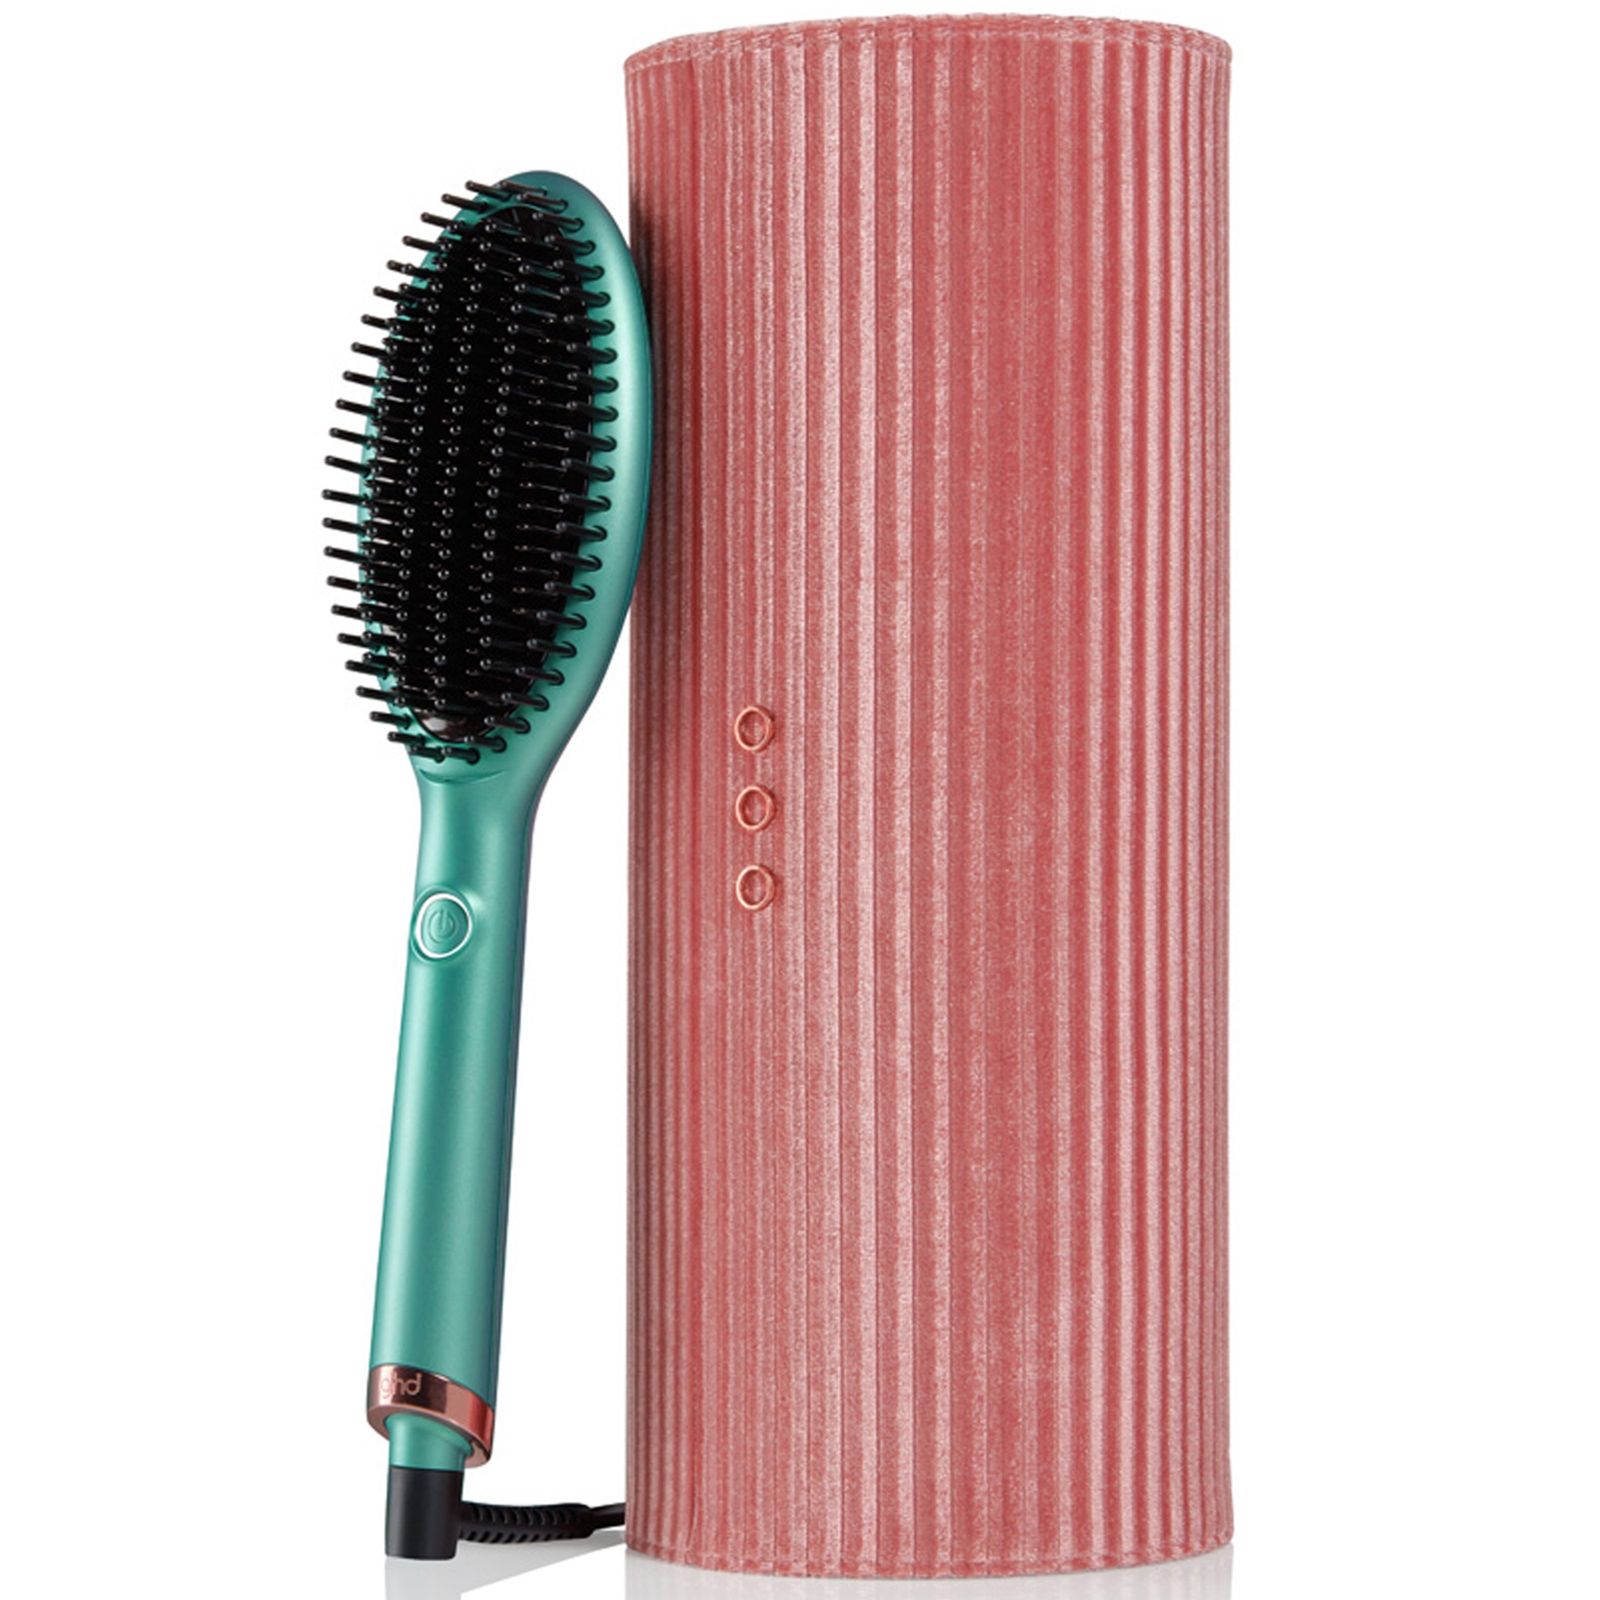 Image of ghd Glide Smoothing Hot Brush for Hair Styling, Ceramic Hair Straightener Brush - Alluring Jade